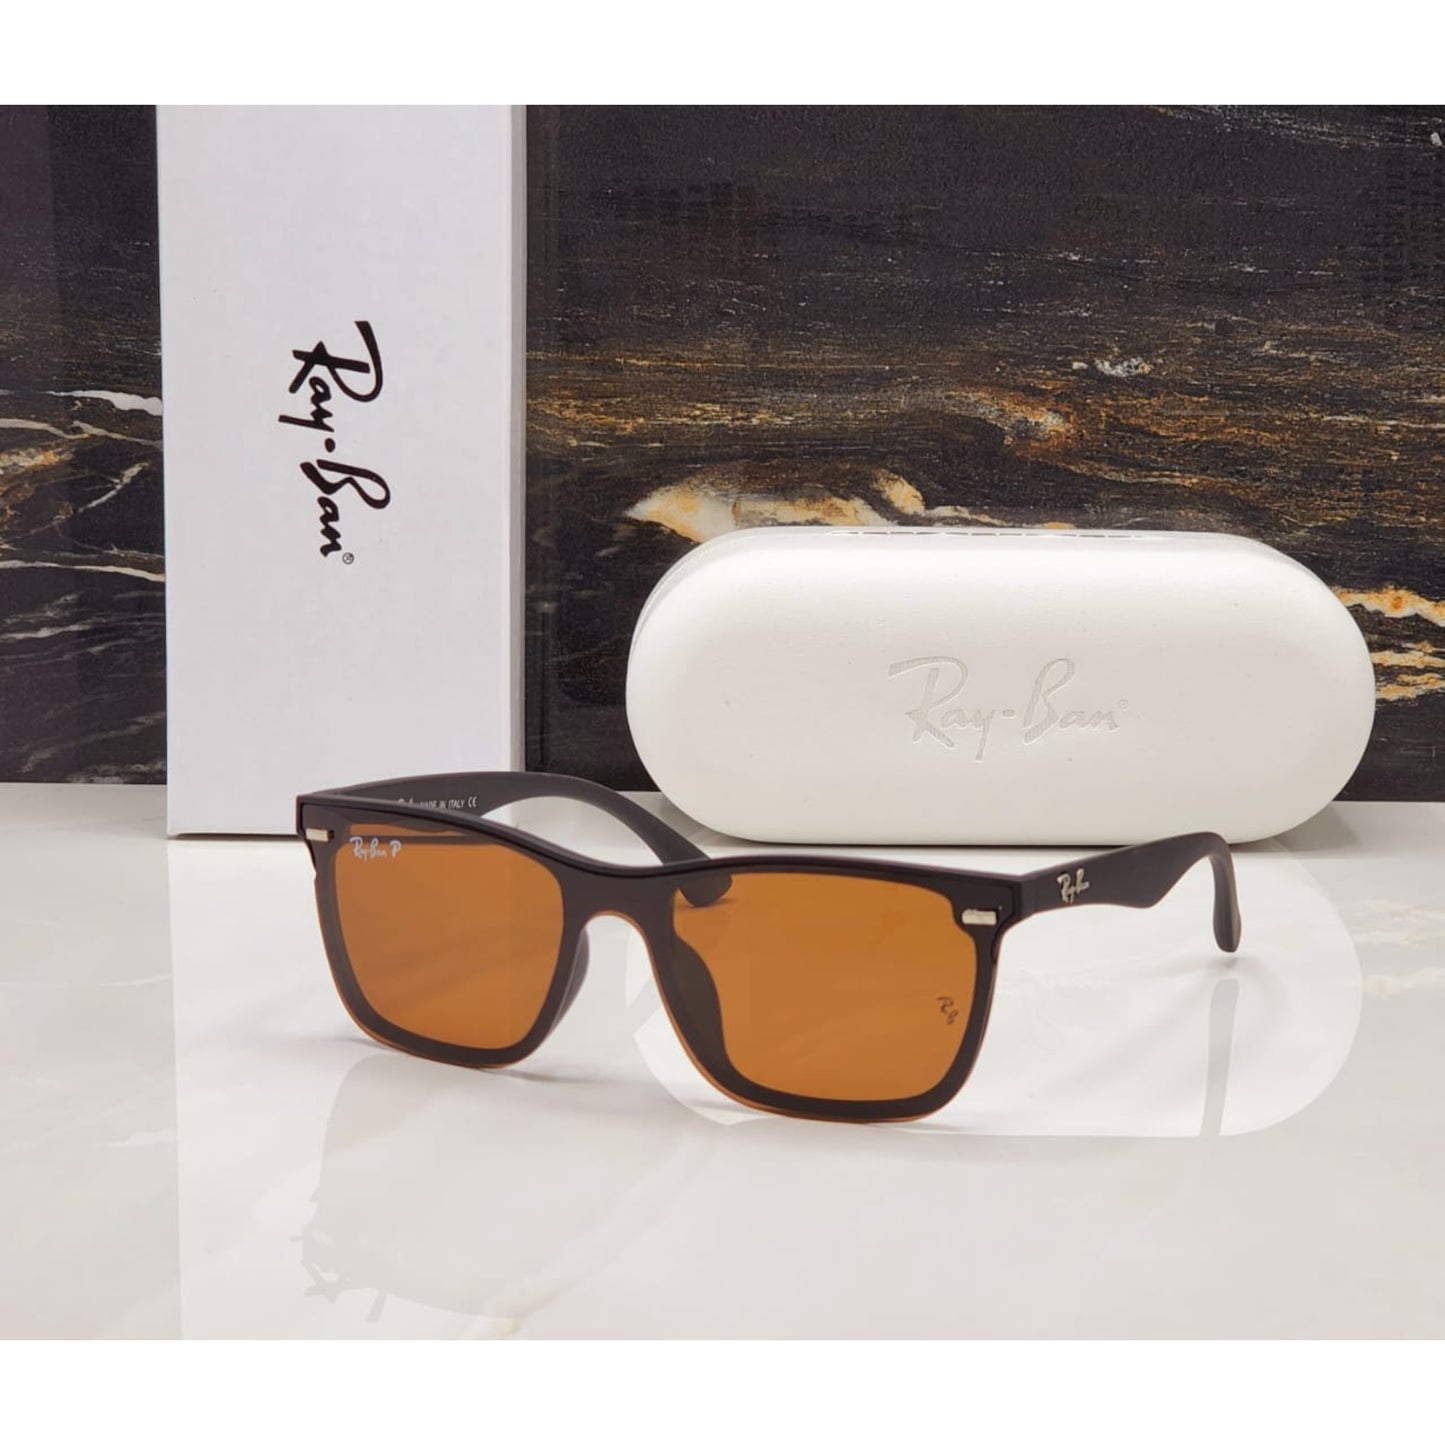 Buy New Stylish Men Women A1+ Quality Latest Designer Hot Favorite Vintage Sunglasses ( RB-650 Square Sunglass )